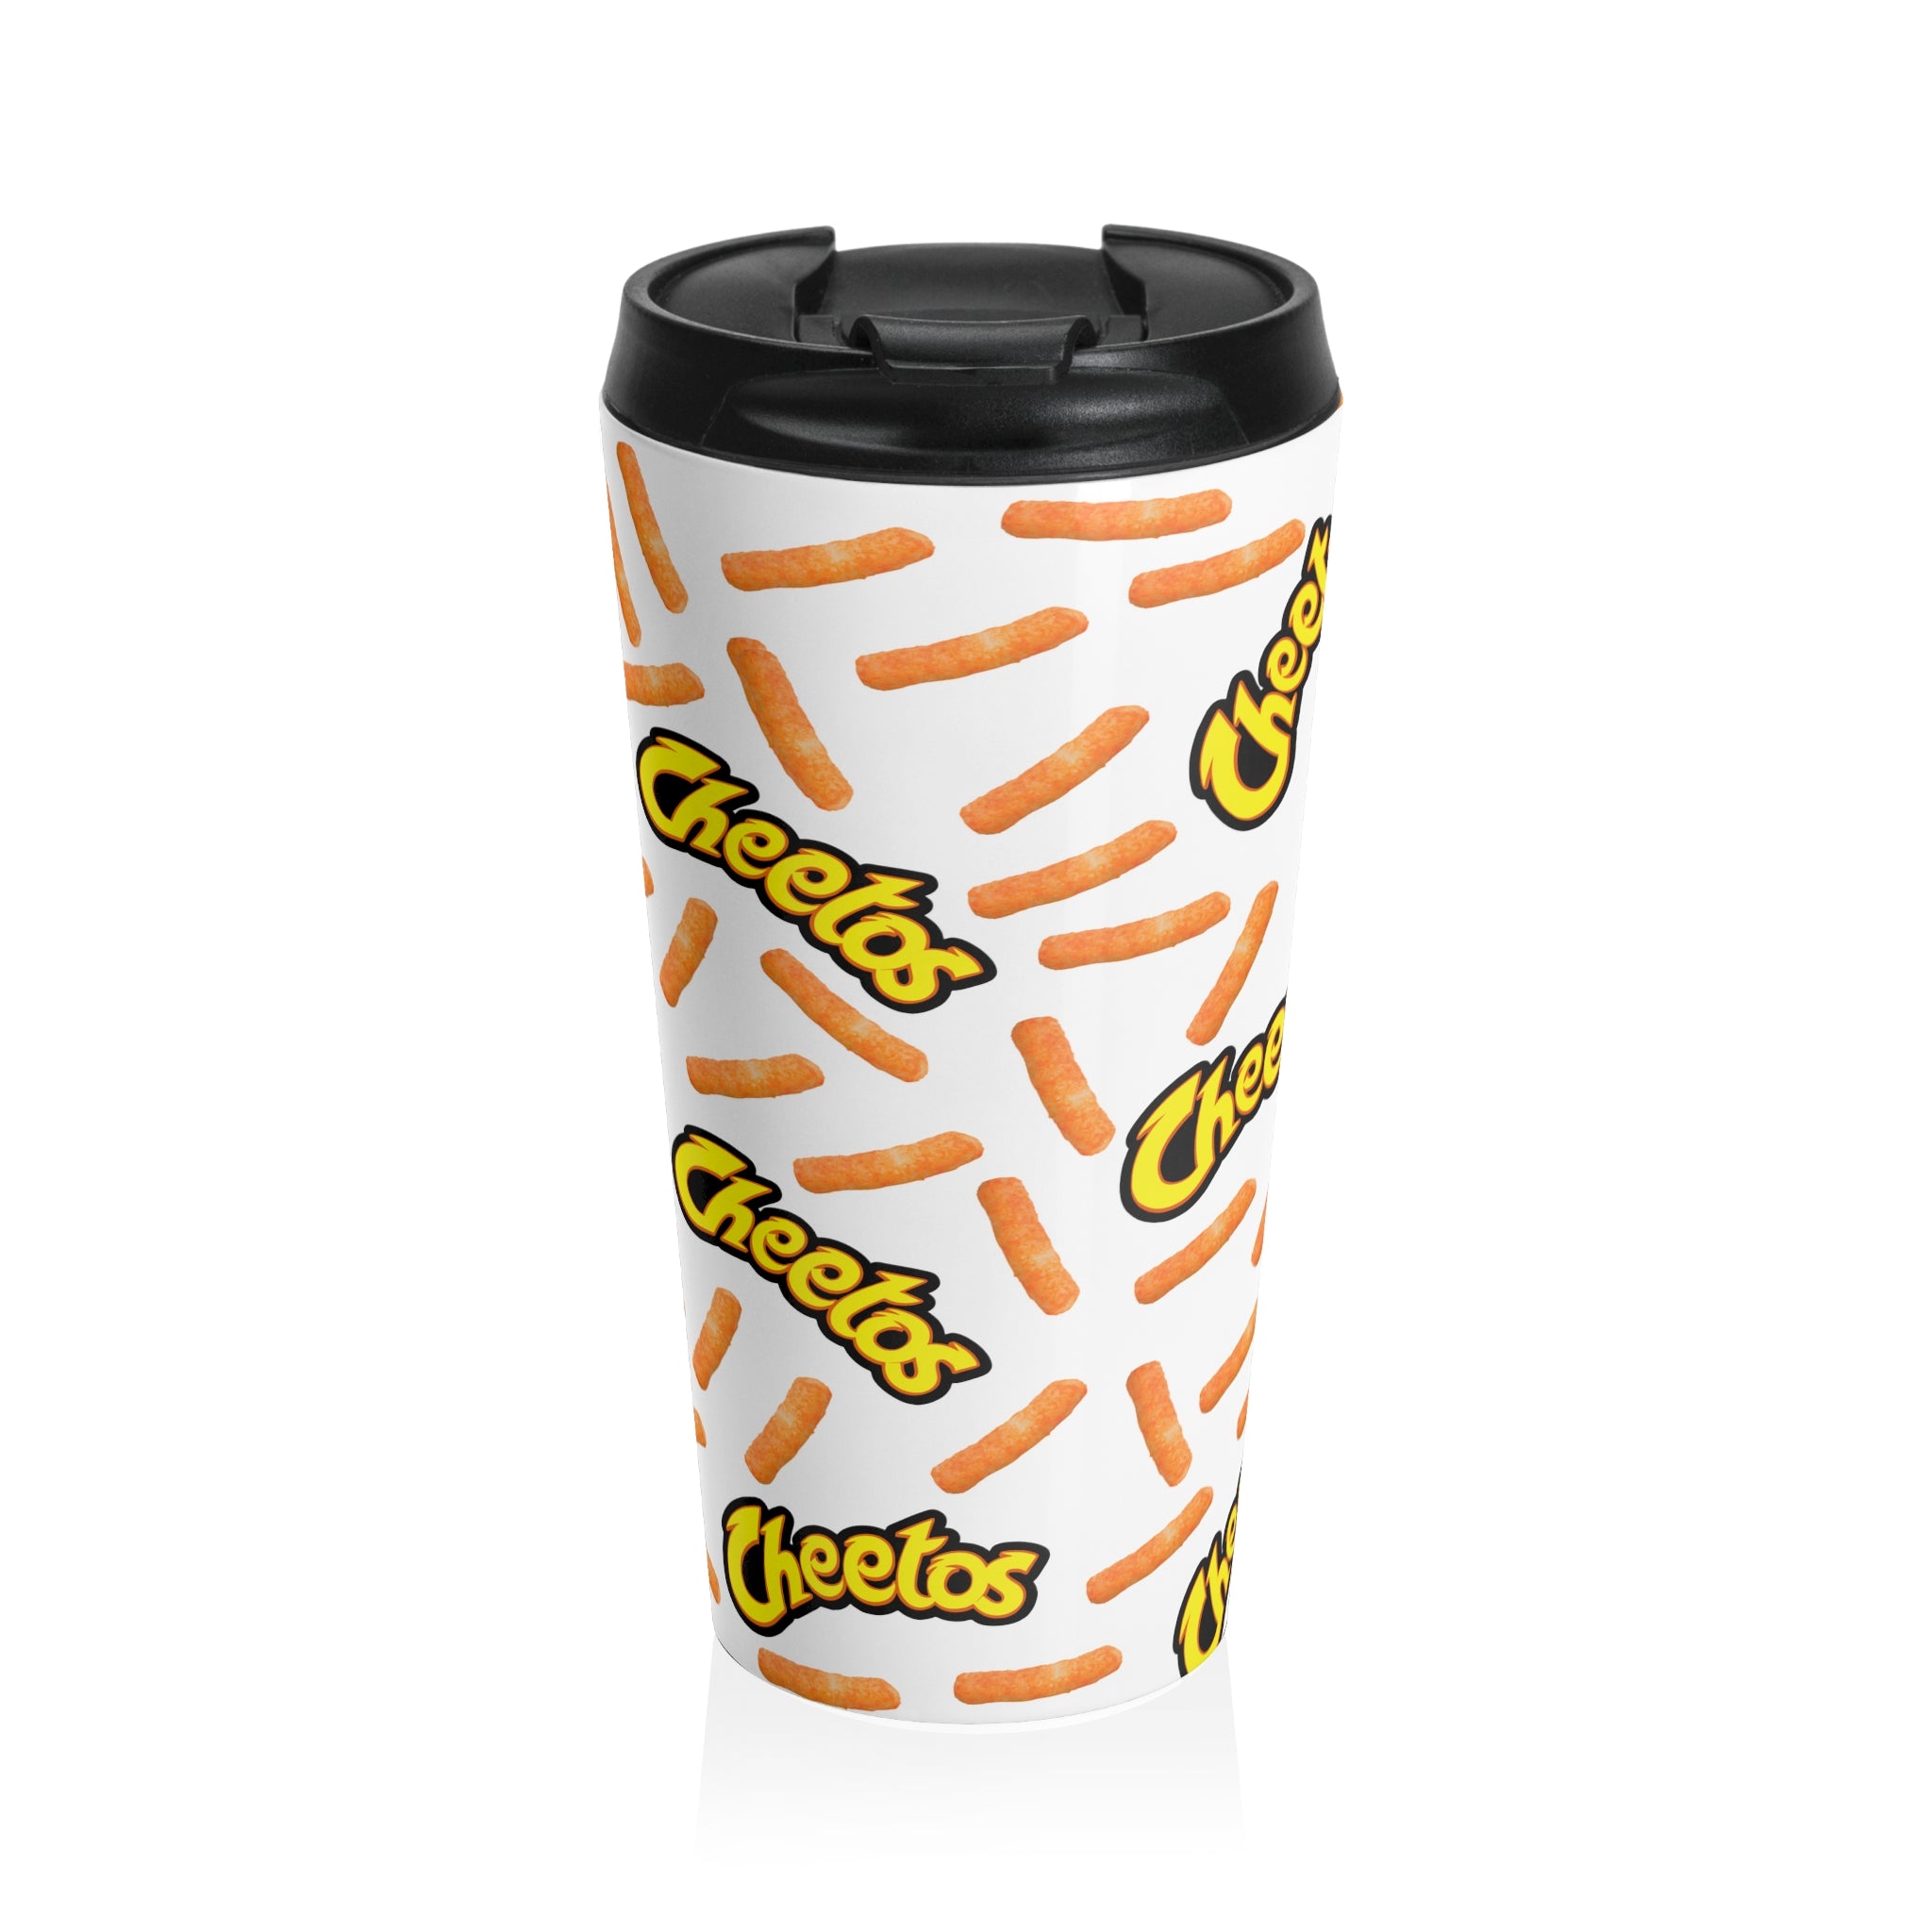 Cheetos Puffs Pattern Stainless Steel Travel Mug